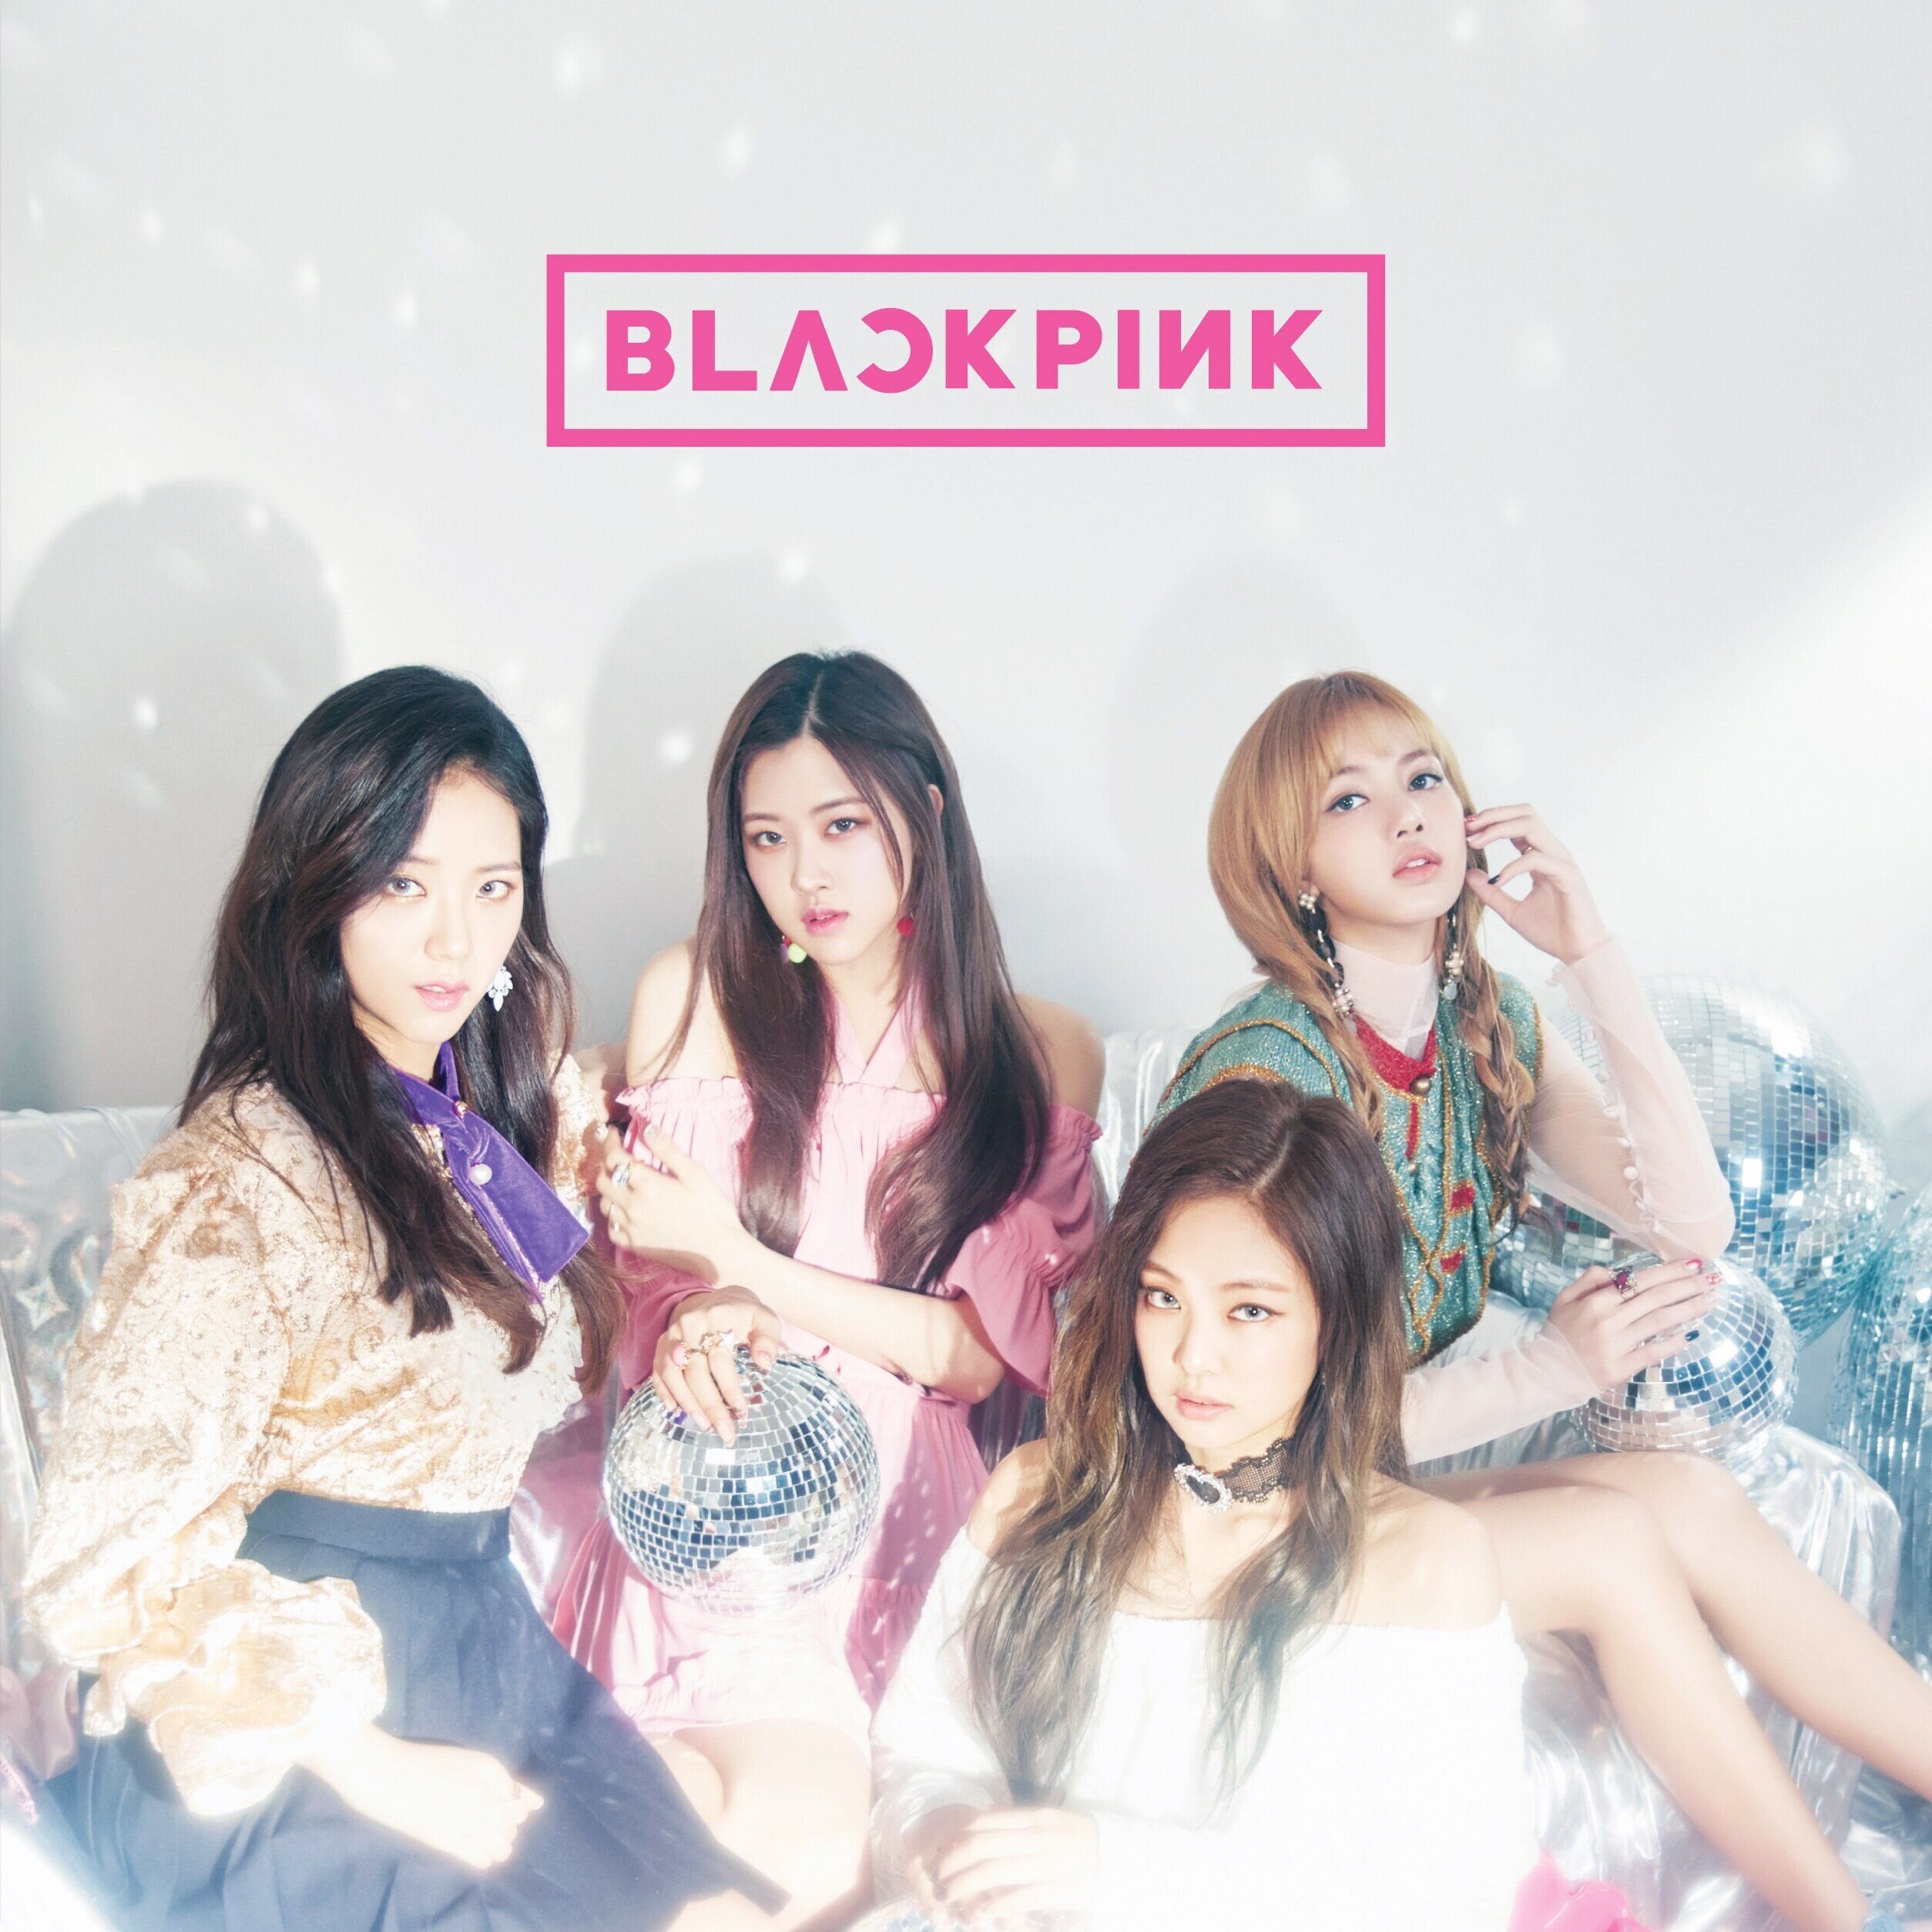 Blackpink 1st Japan Debut Blackpink Japan Mini Album Photo BlΛƆkpiИk 